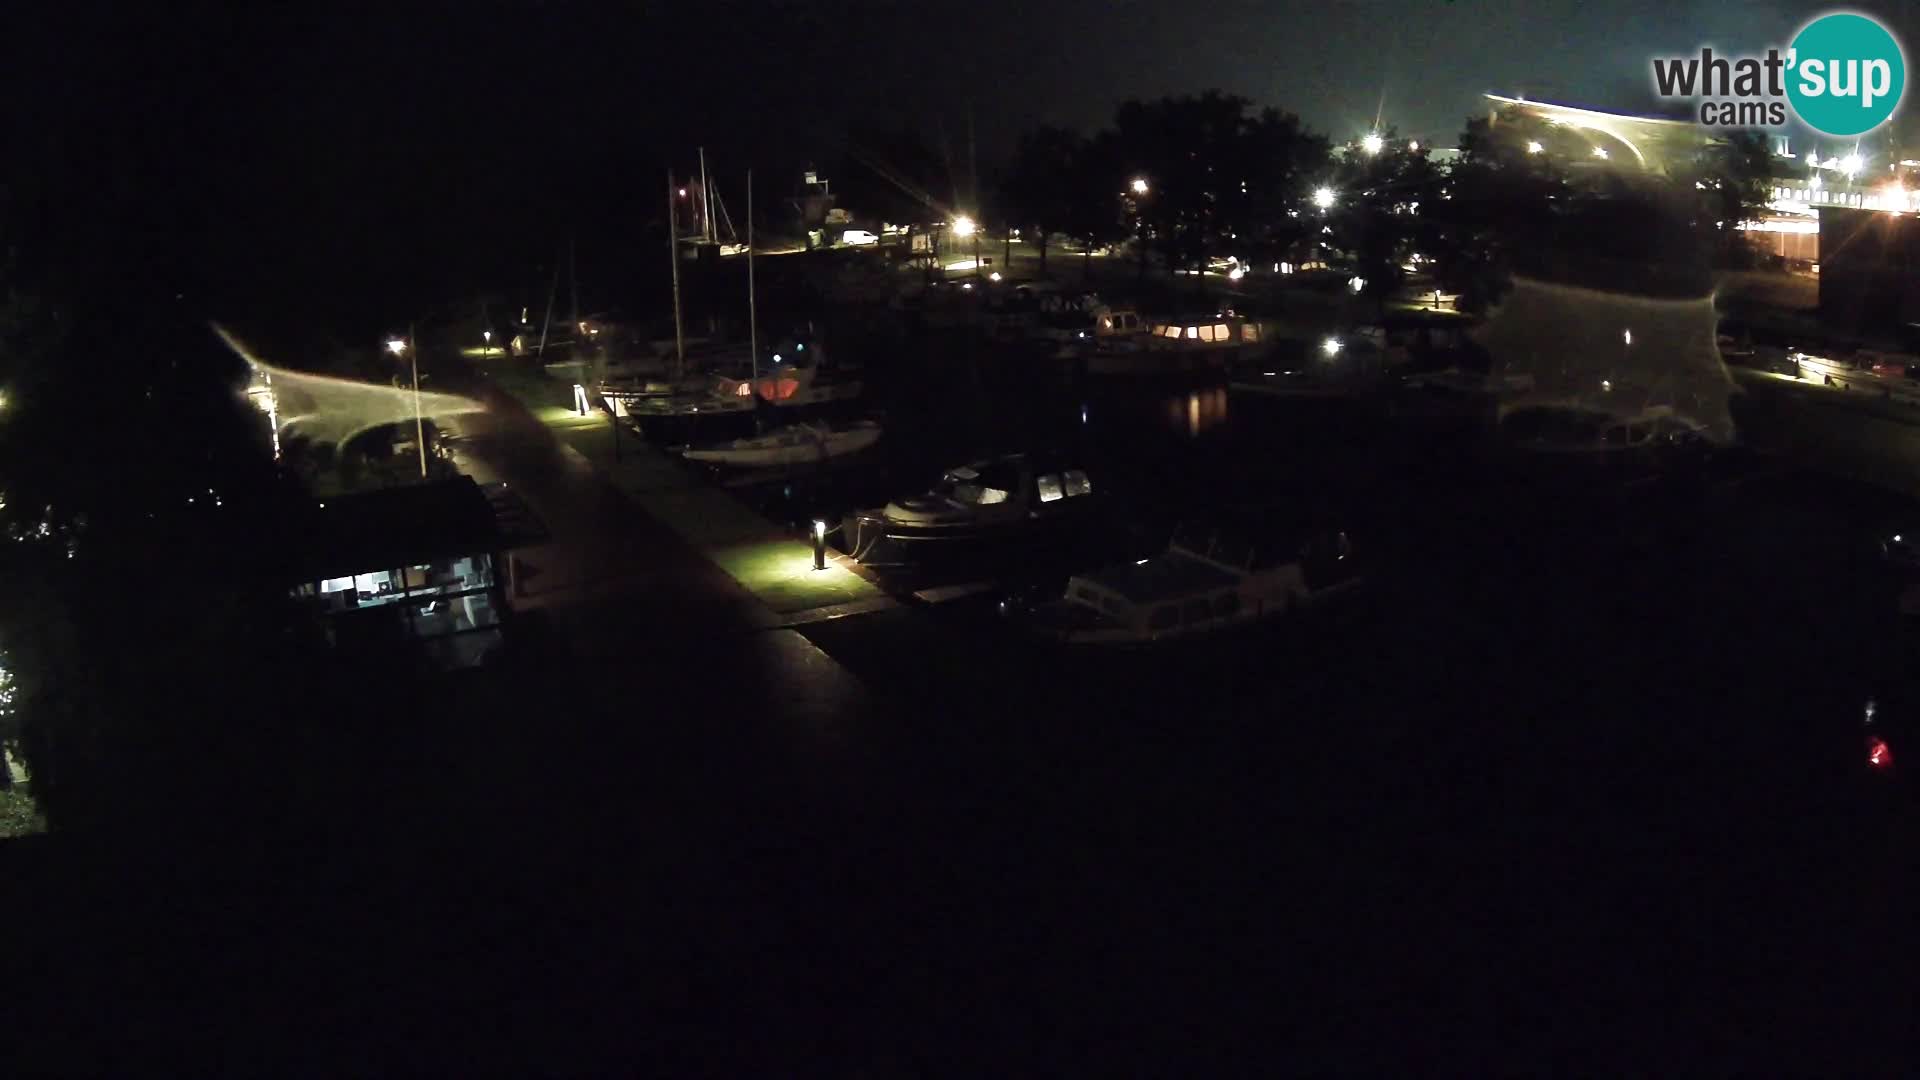 Joure harbour webcam – windmill view